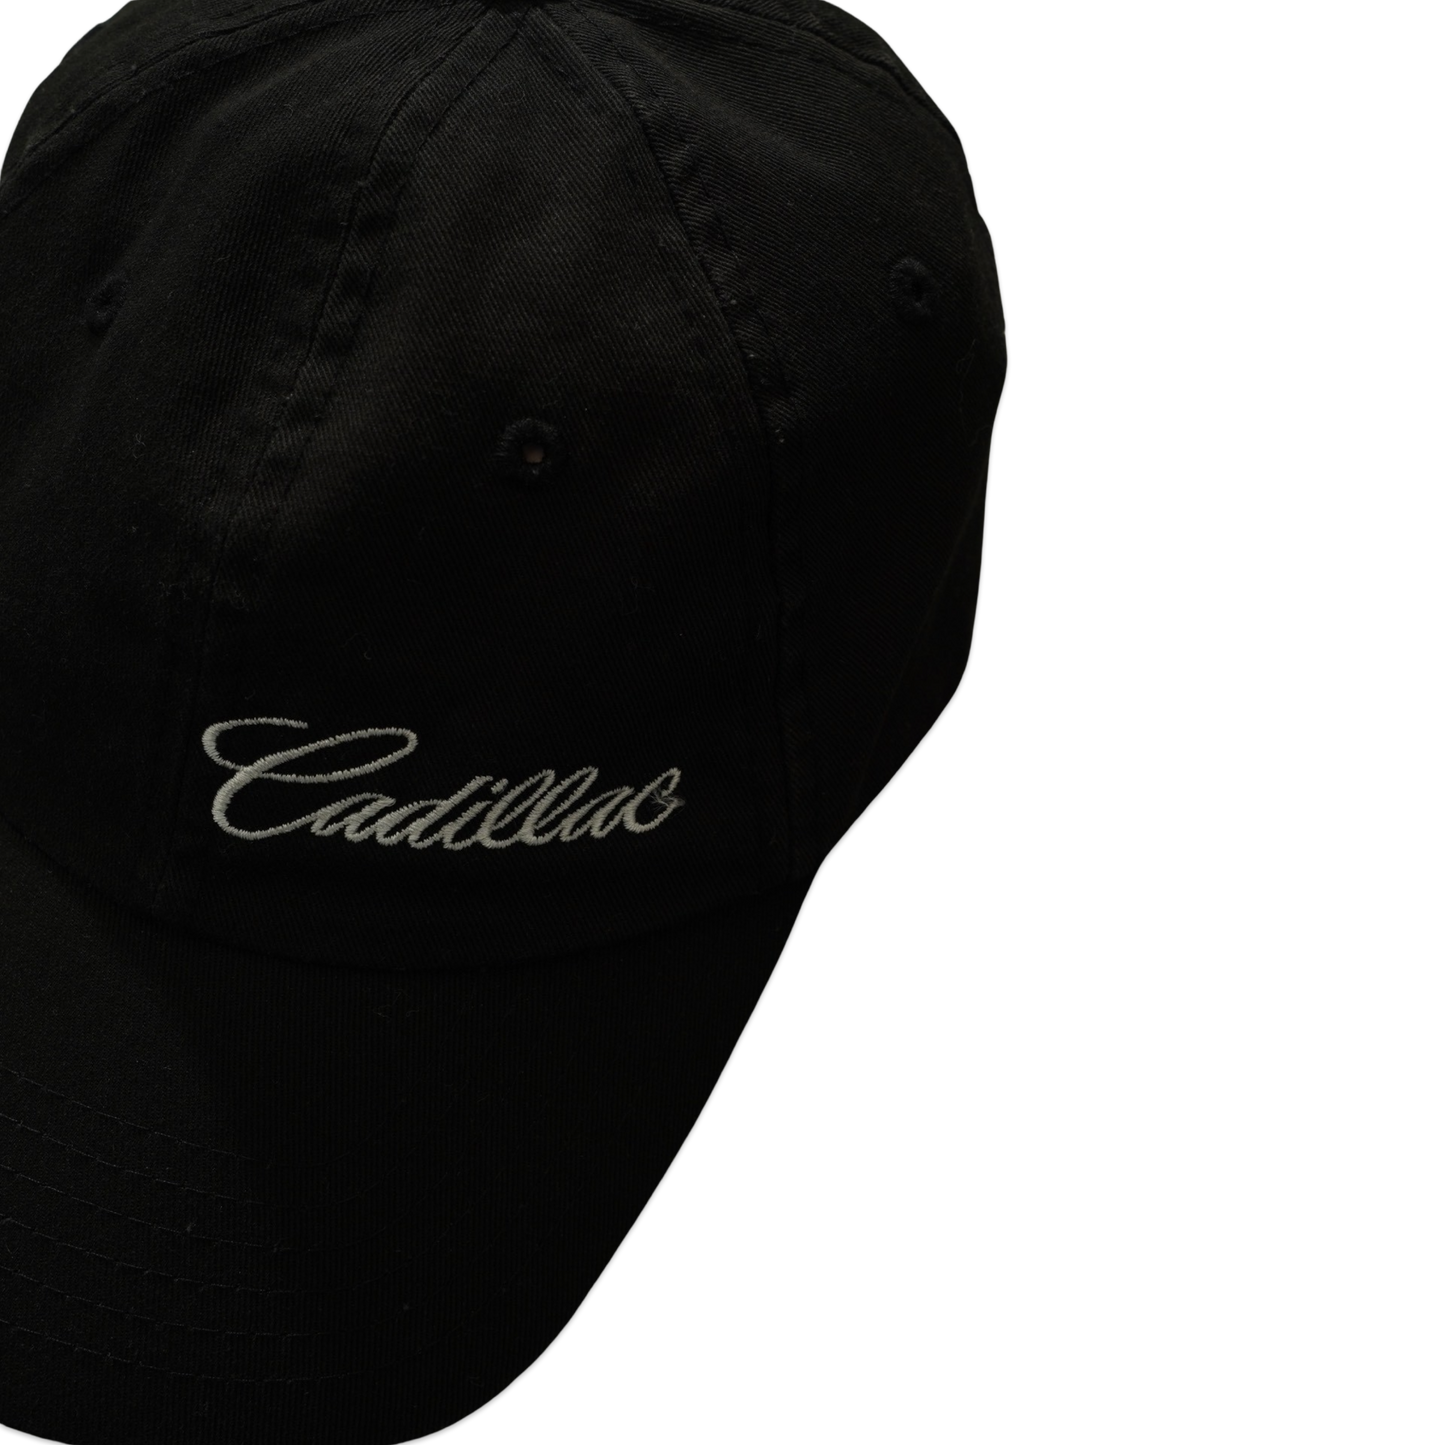 Cadillac Hat